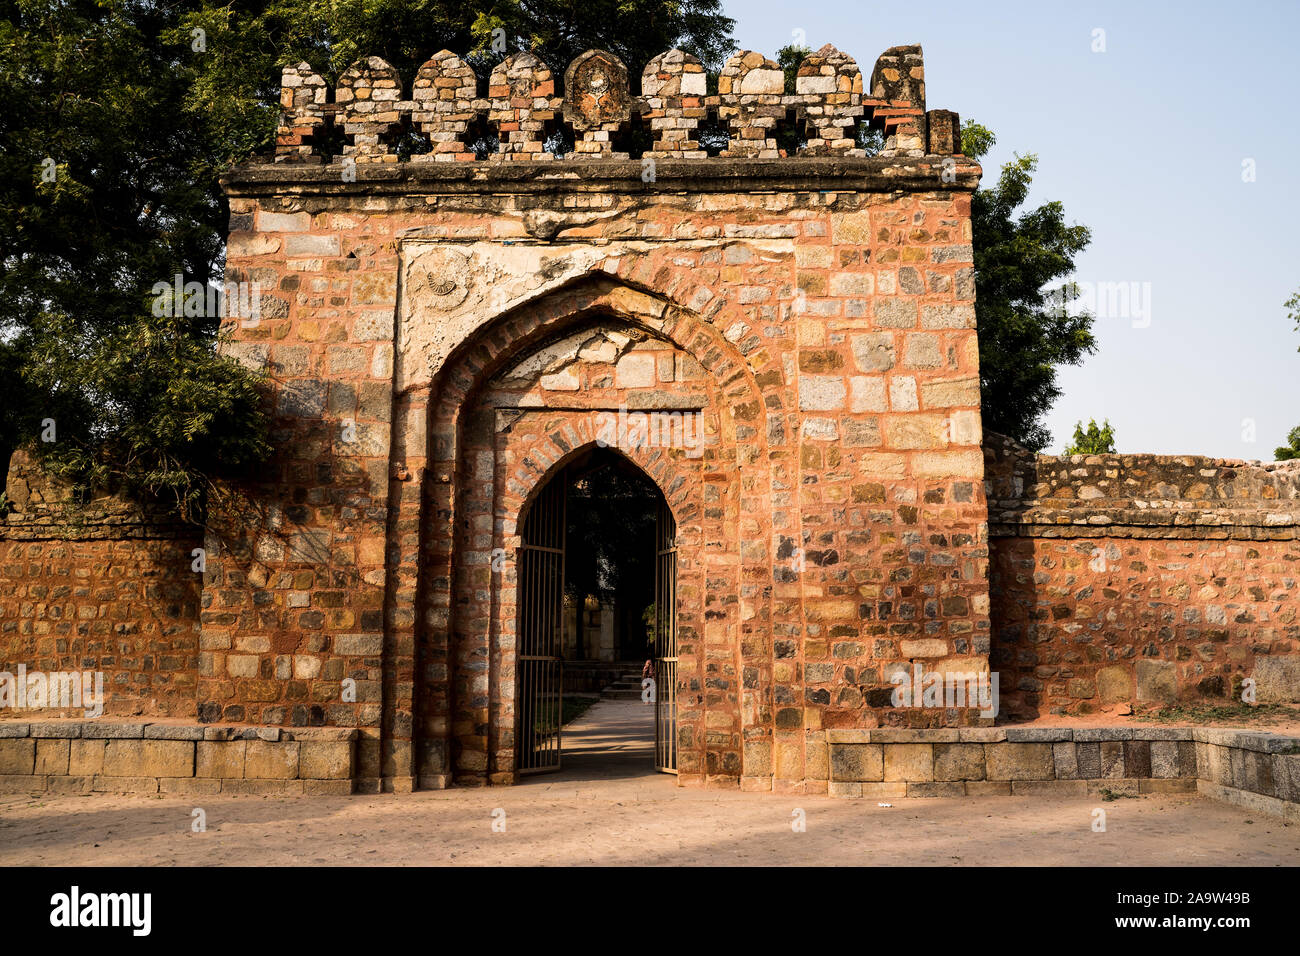 Entrance to the Tomb of Sikandar Lodi, the ruler of the Lodi Dynasty in Lodhi Gardens in New Delhi, India Stock Photo